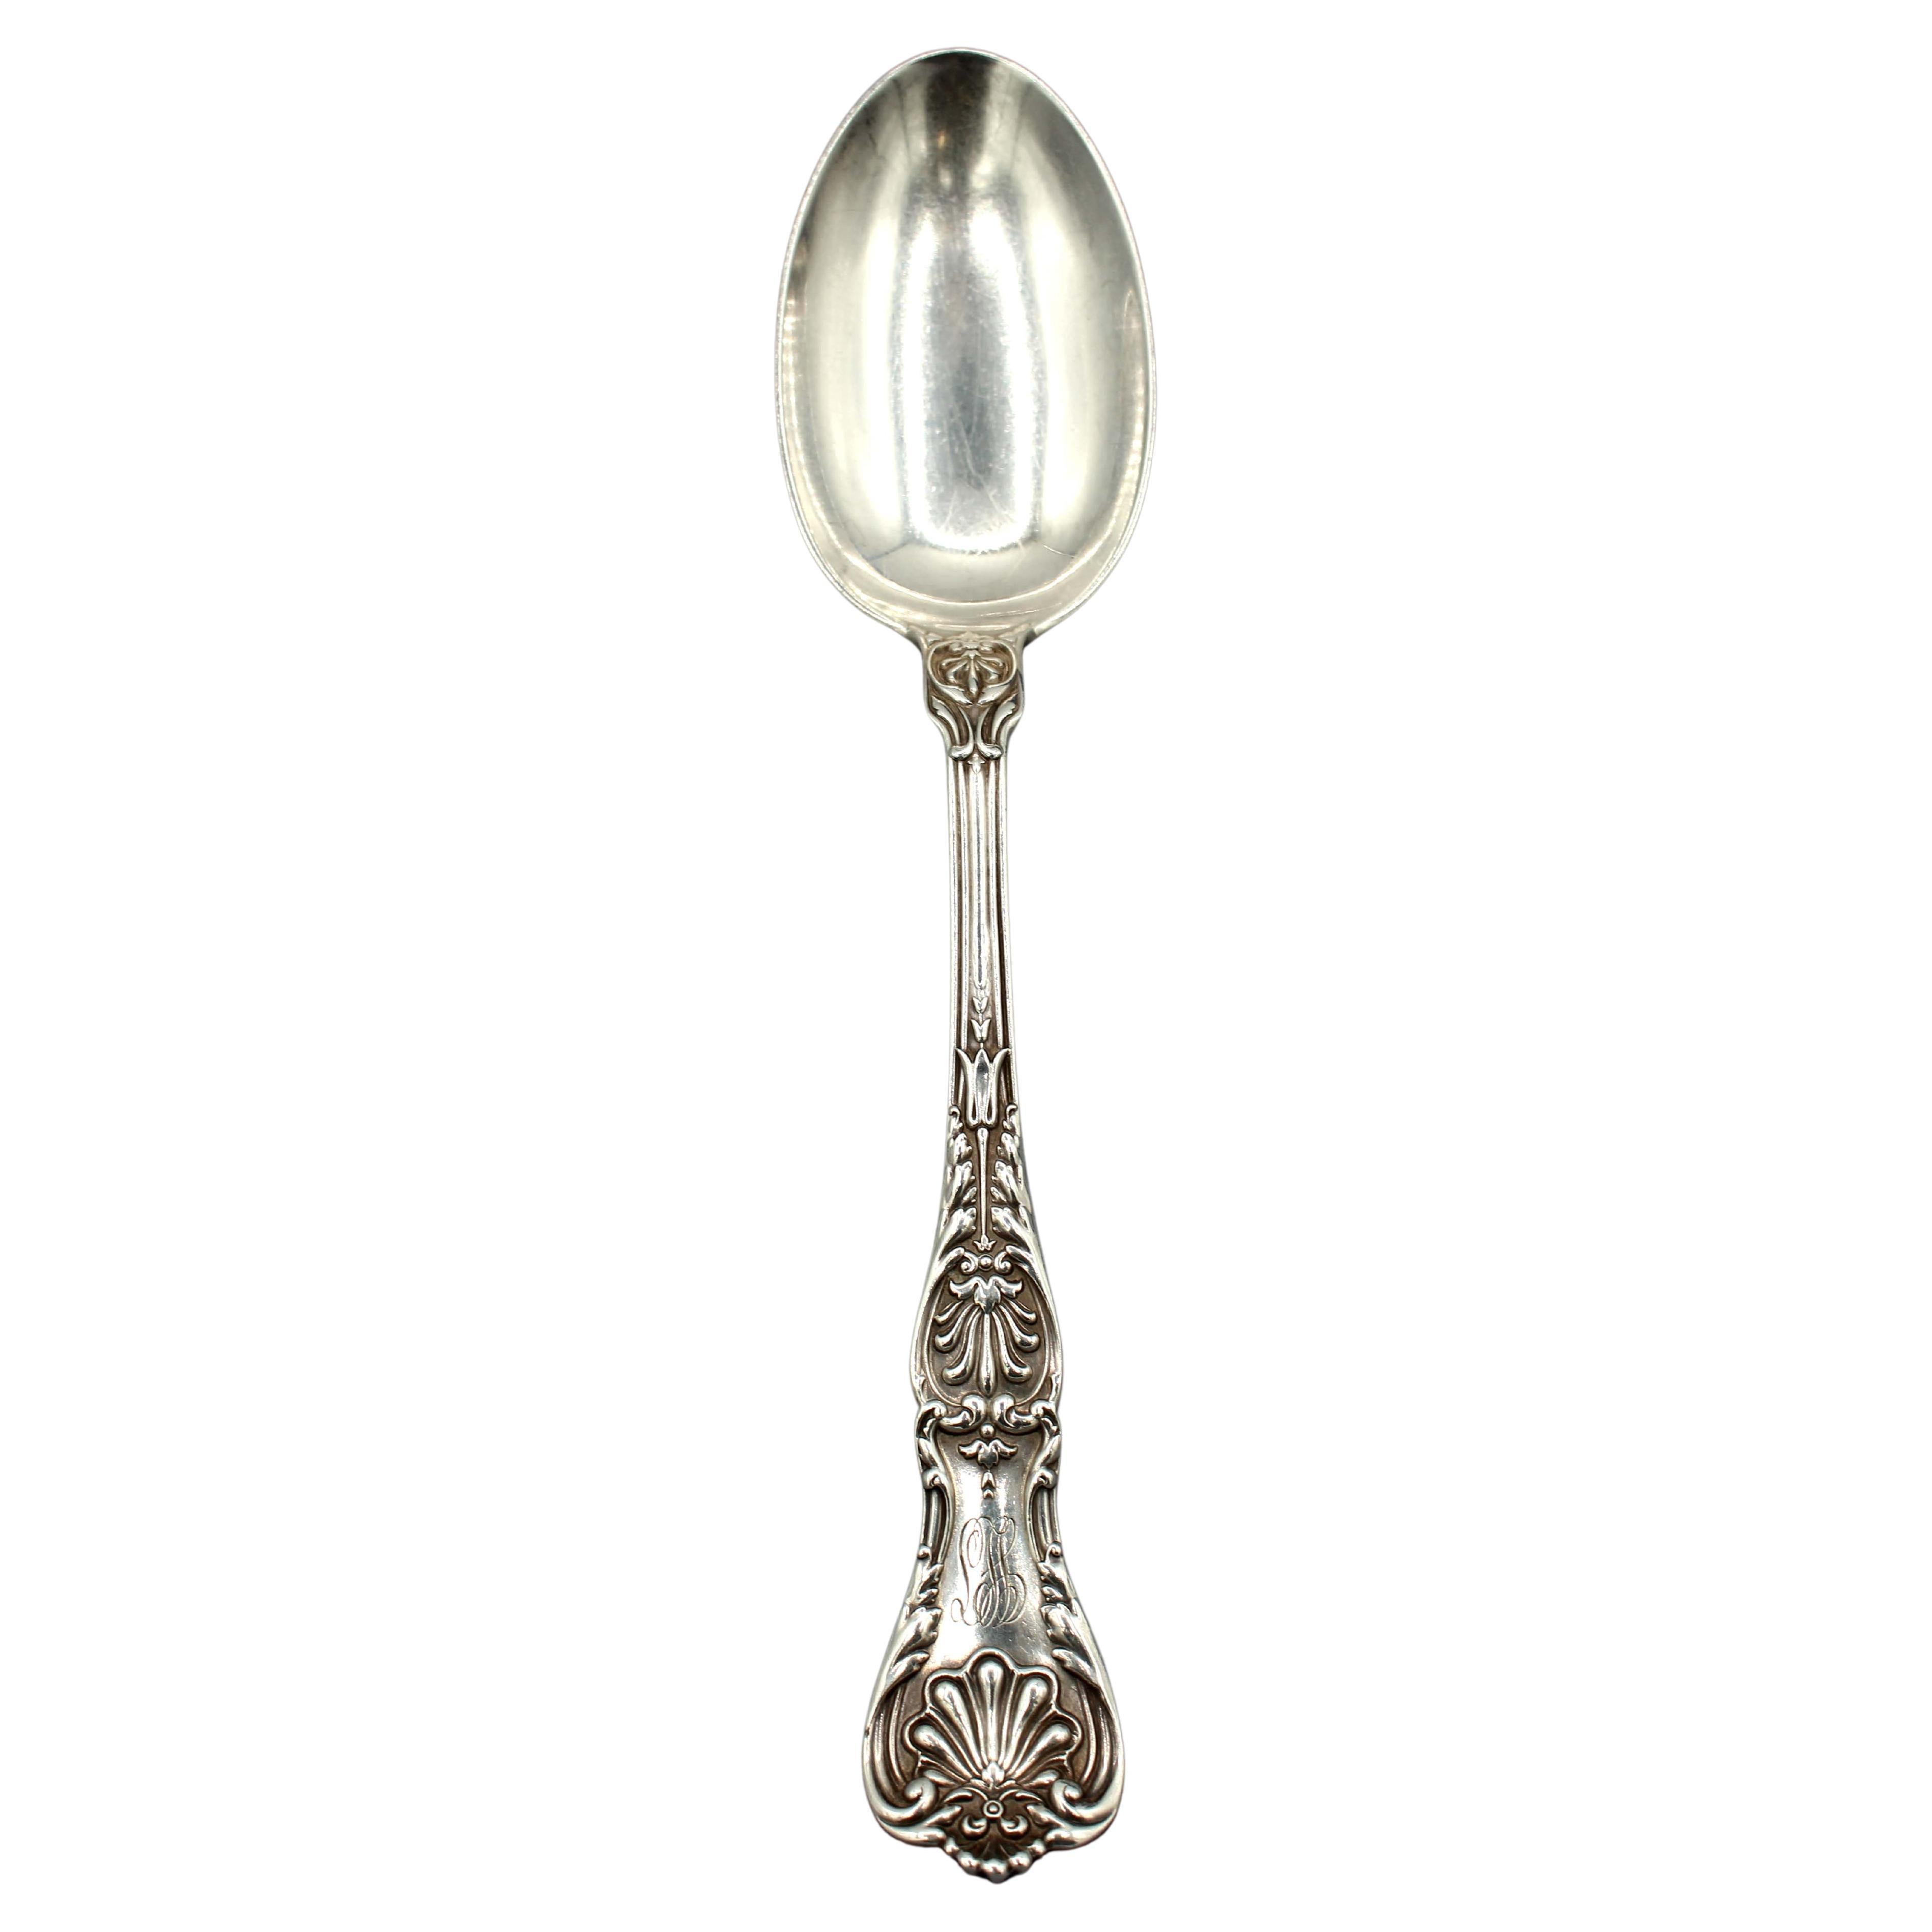 1904 Sterling Silver "King George" Pattern Spoon by Gorham